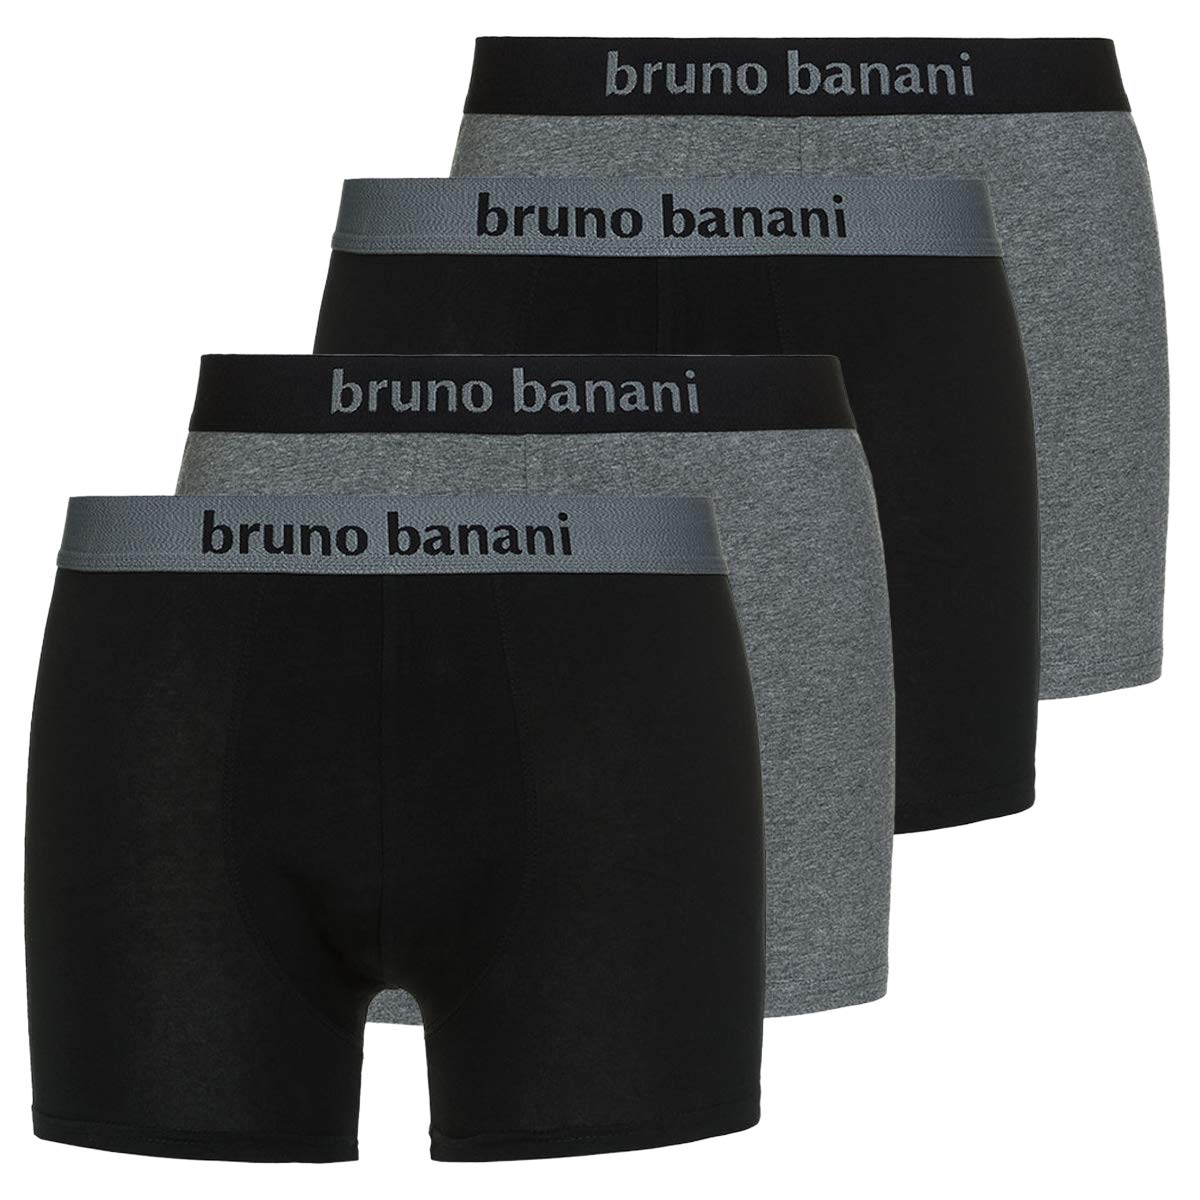 bruno banani - Flowing - Short - 4er Pack (6 Schwarz / Grau Melange)